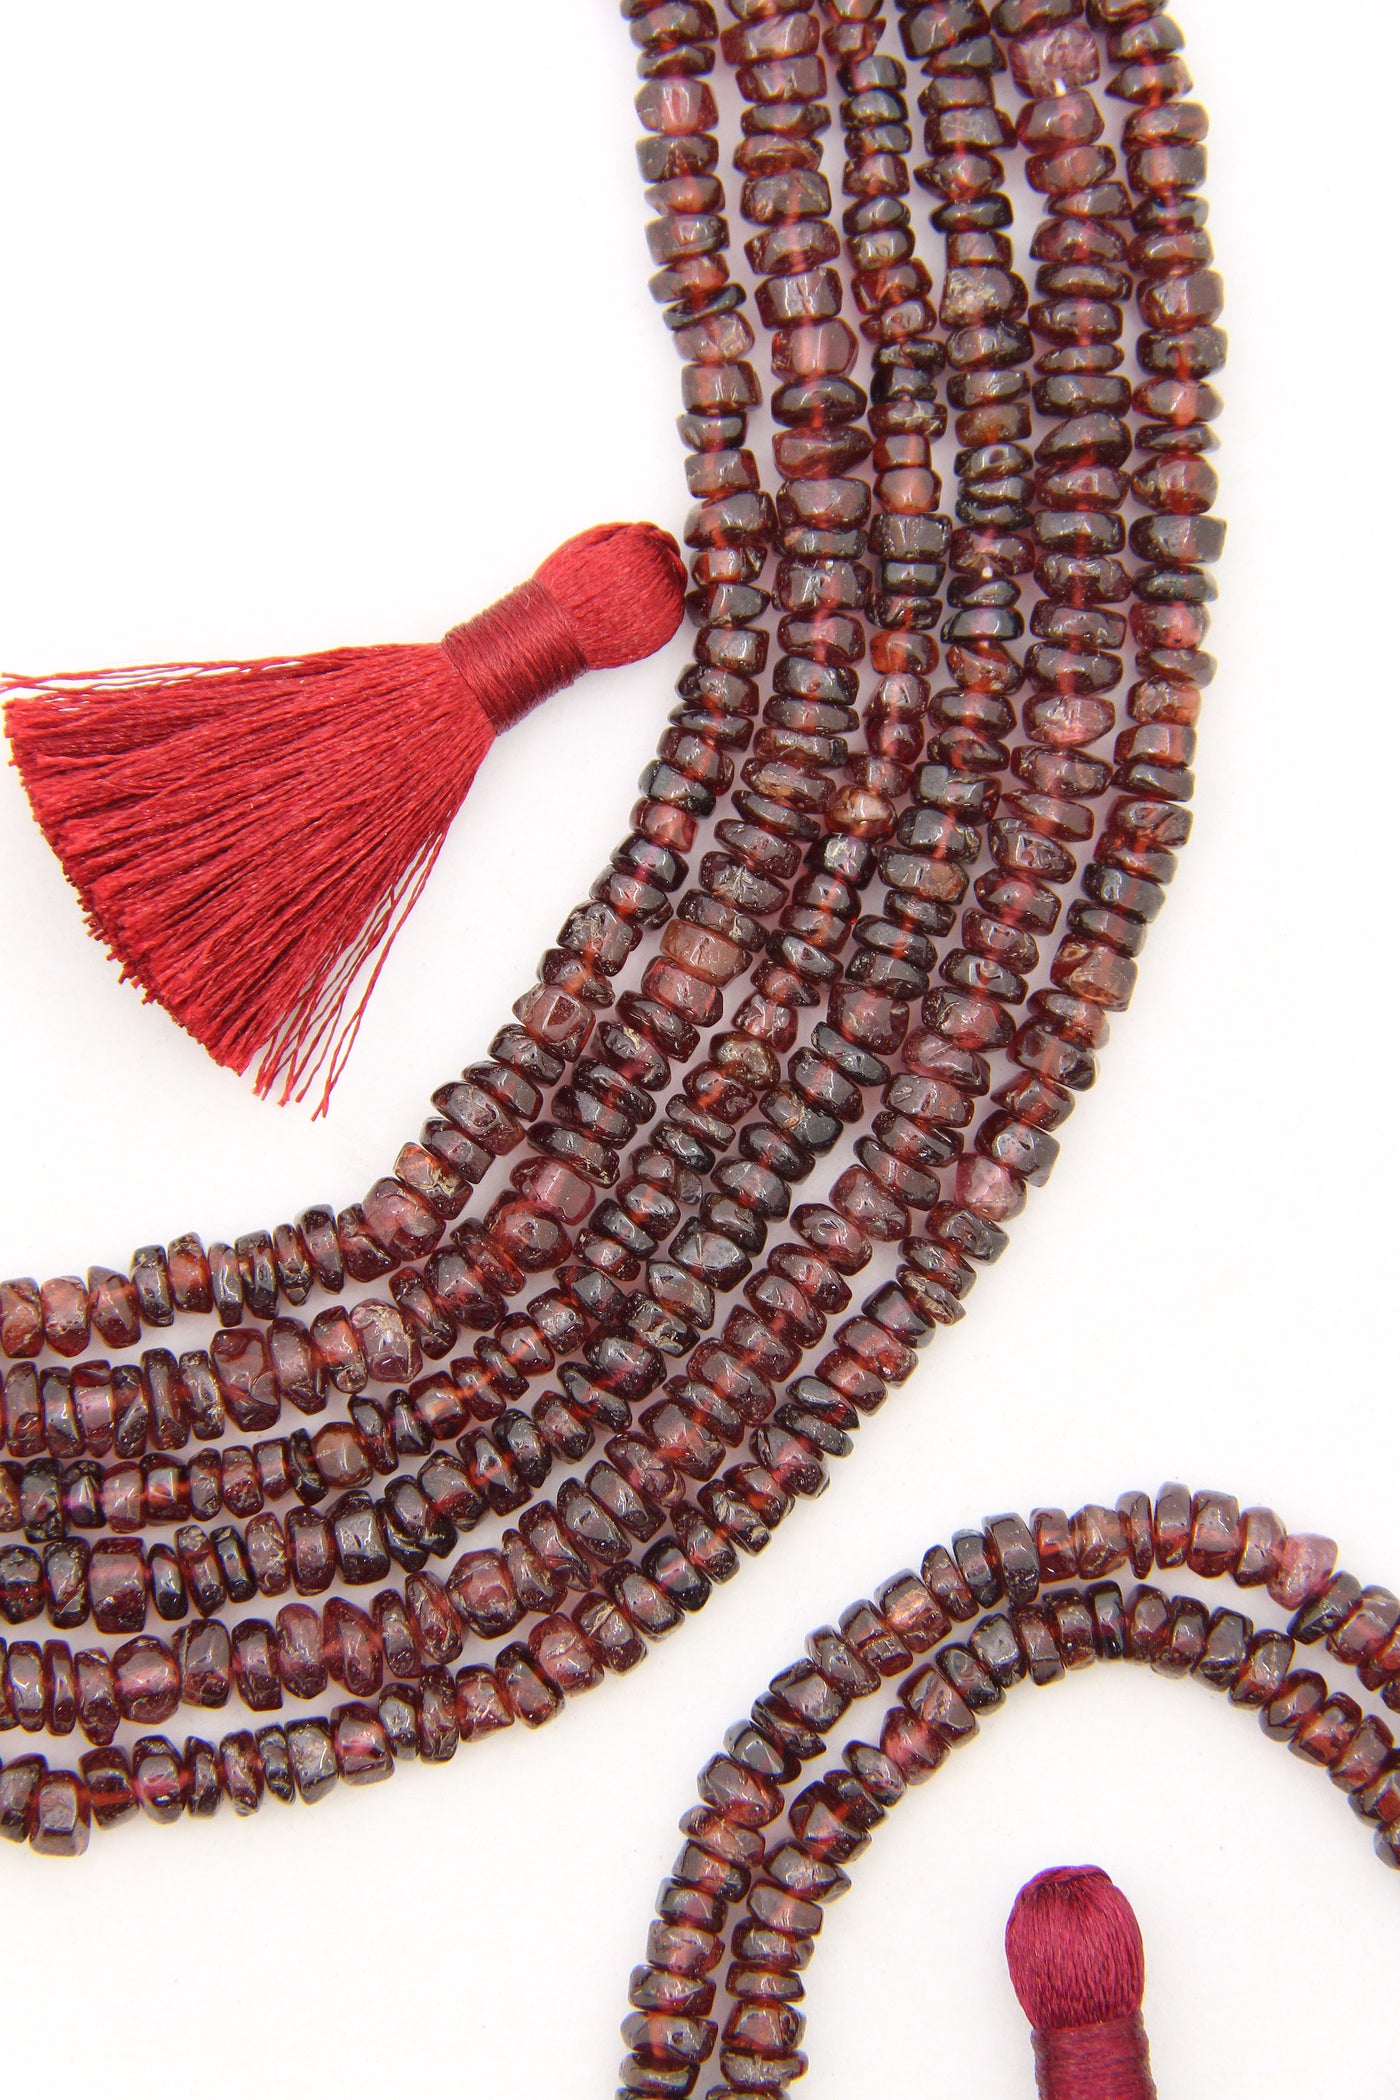 Garnet Smooth Heishi Tyre Beads, 5-6mm, 14 inch strand, for January birthstone beaded jewelry